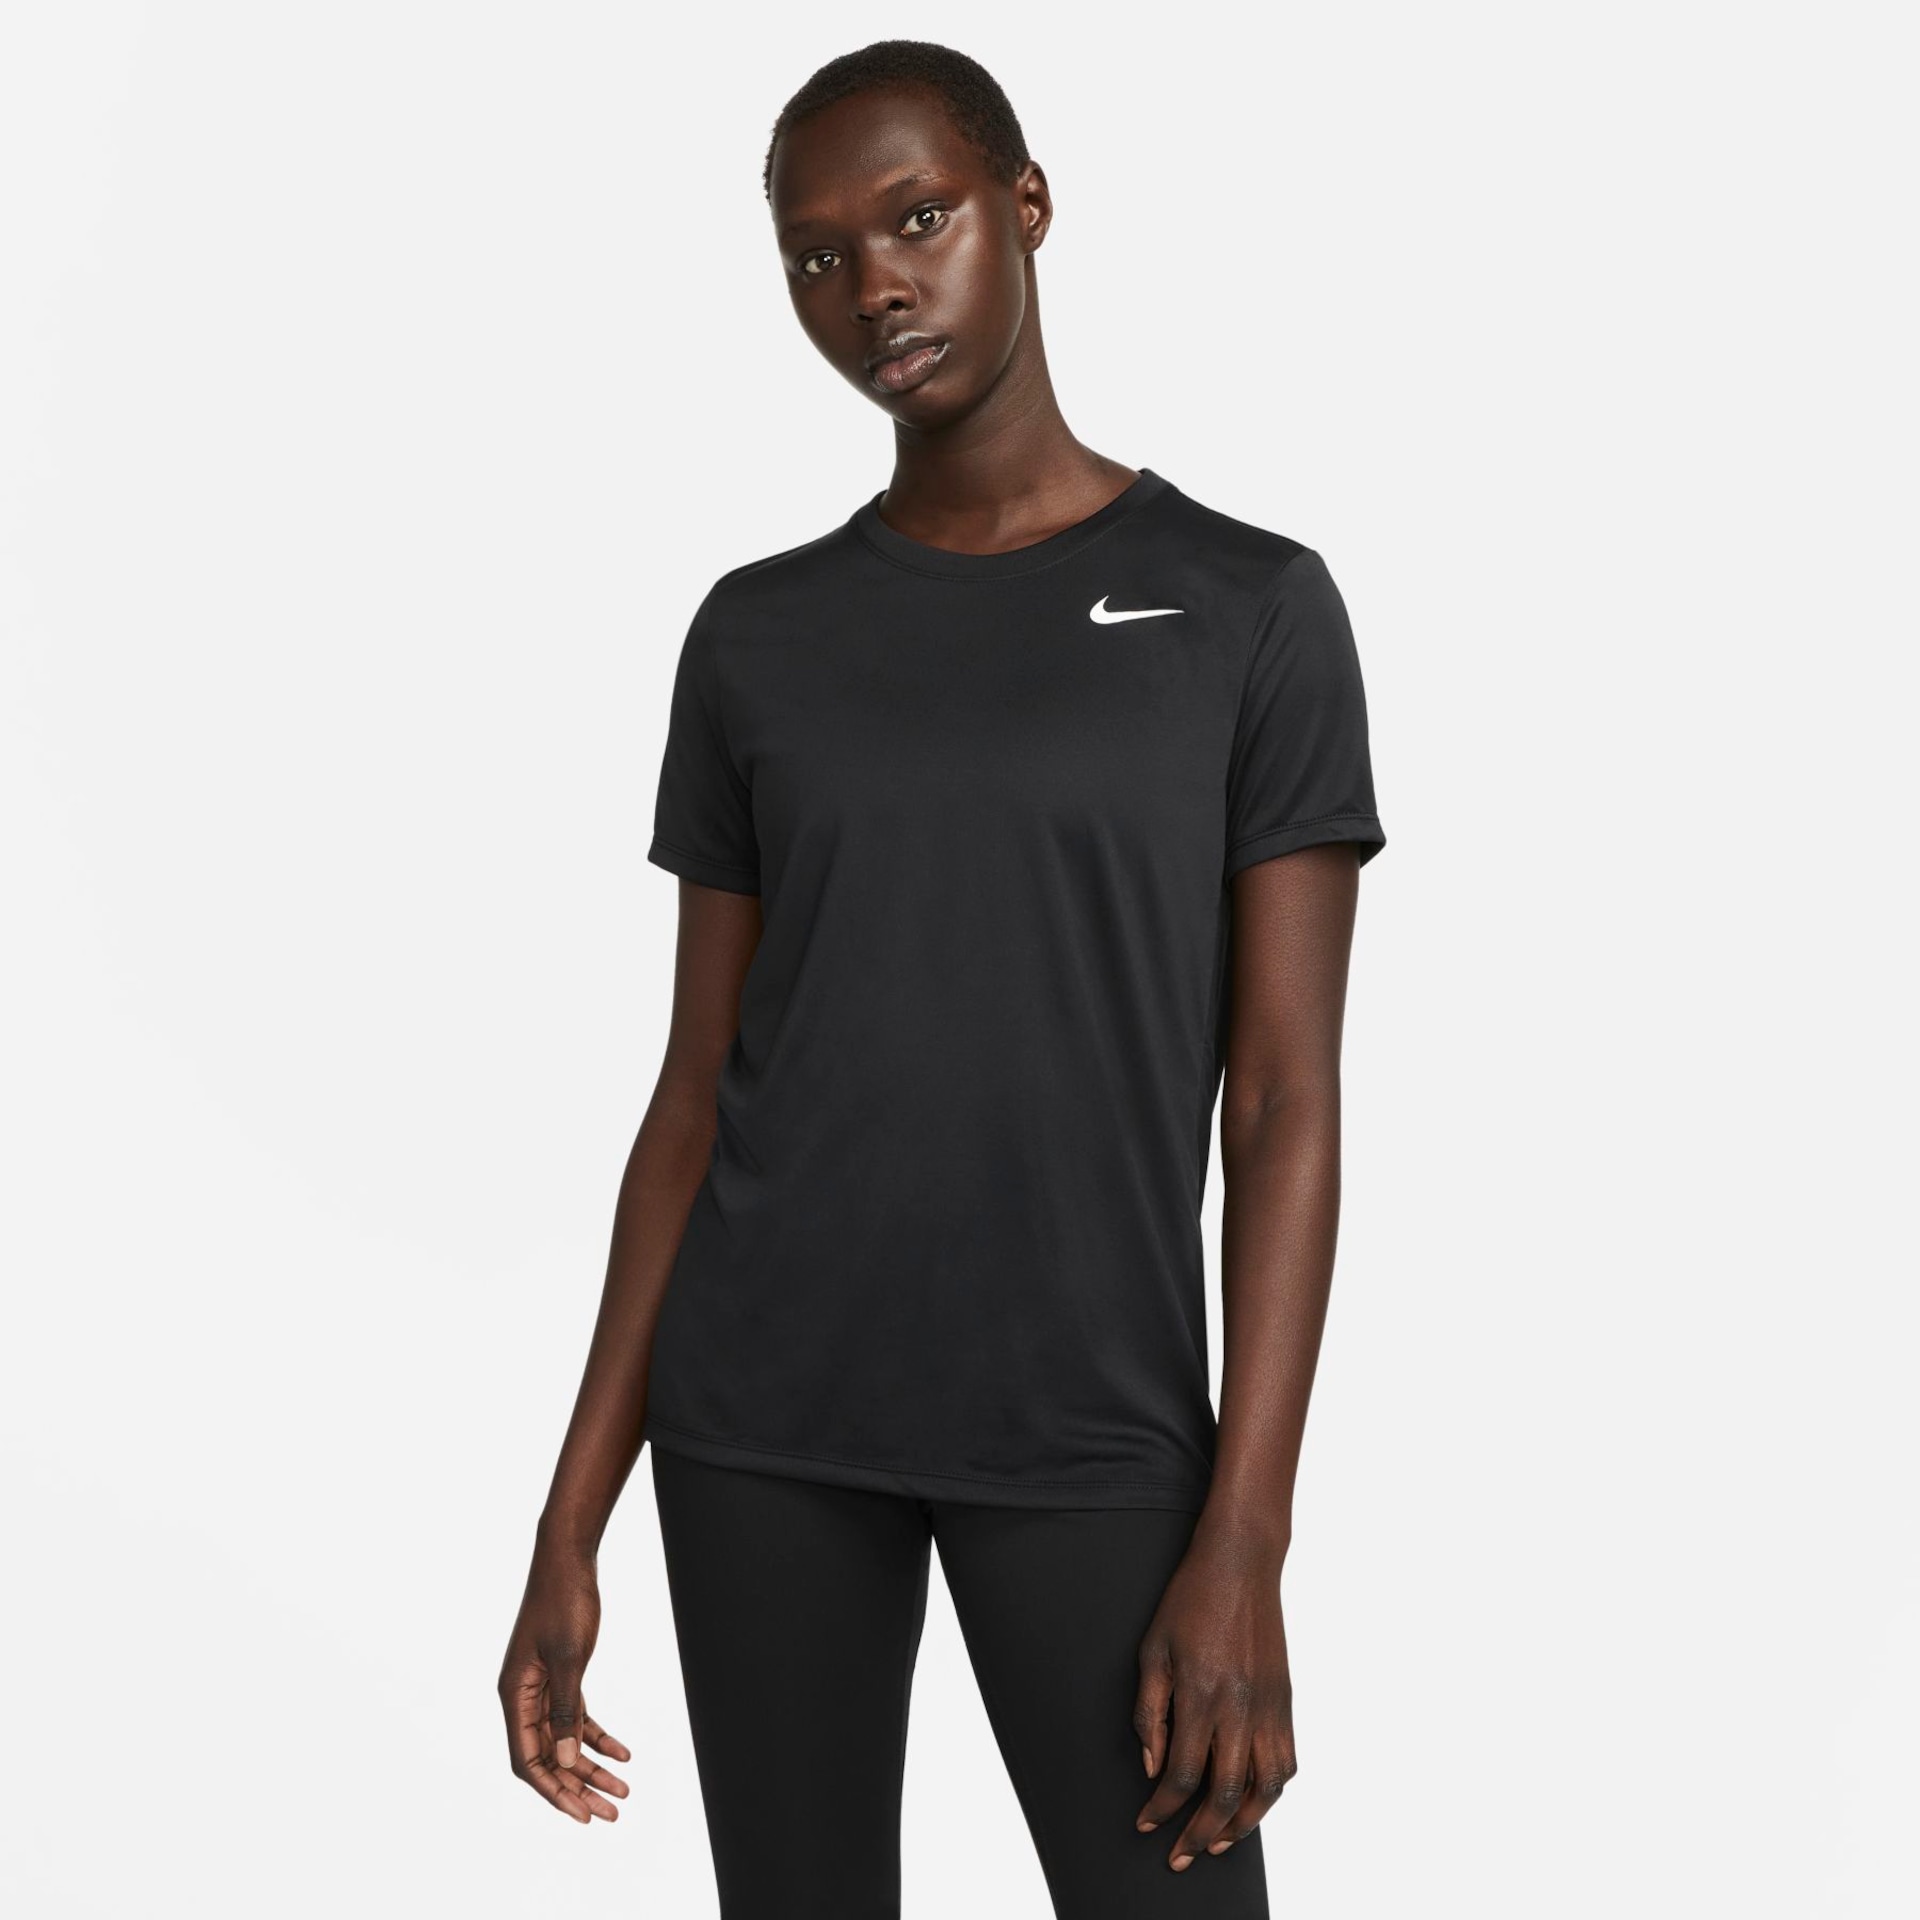 Camiseta Nike Dri-FIT Feminina - Foto 1